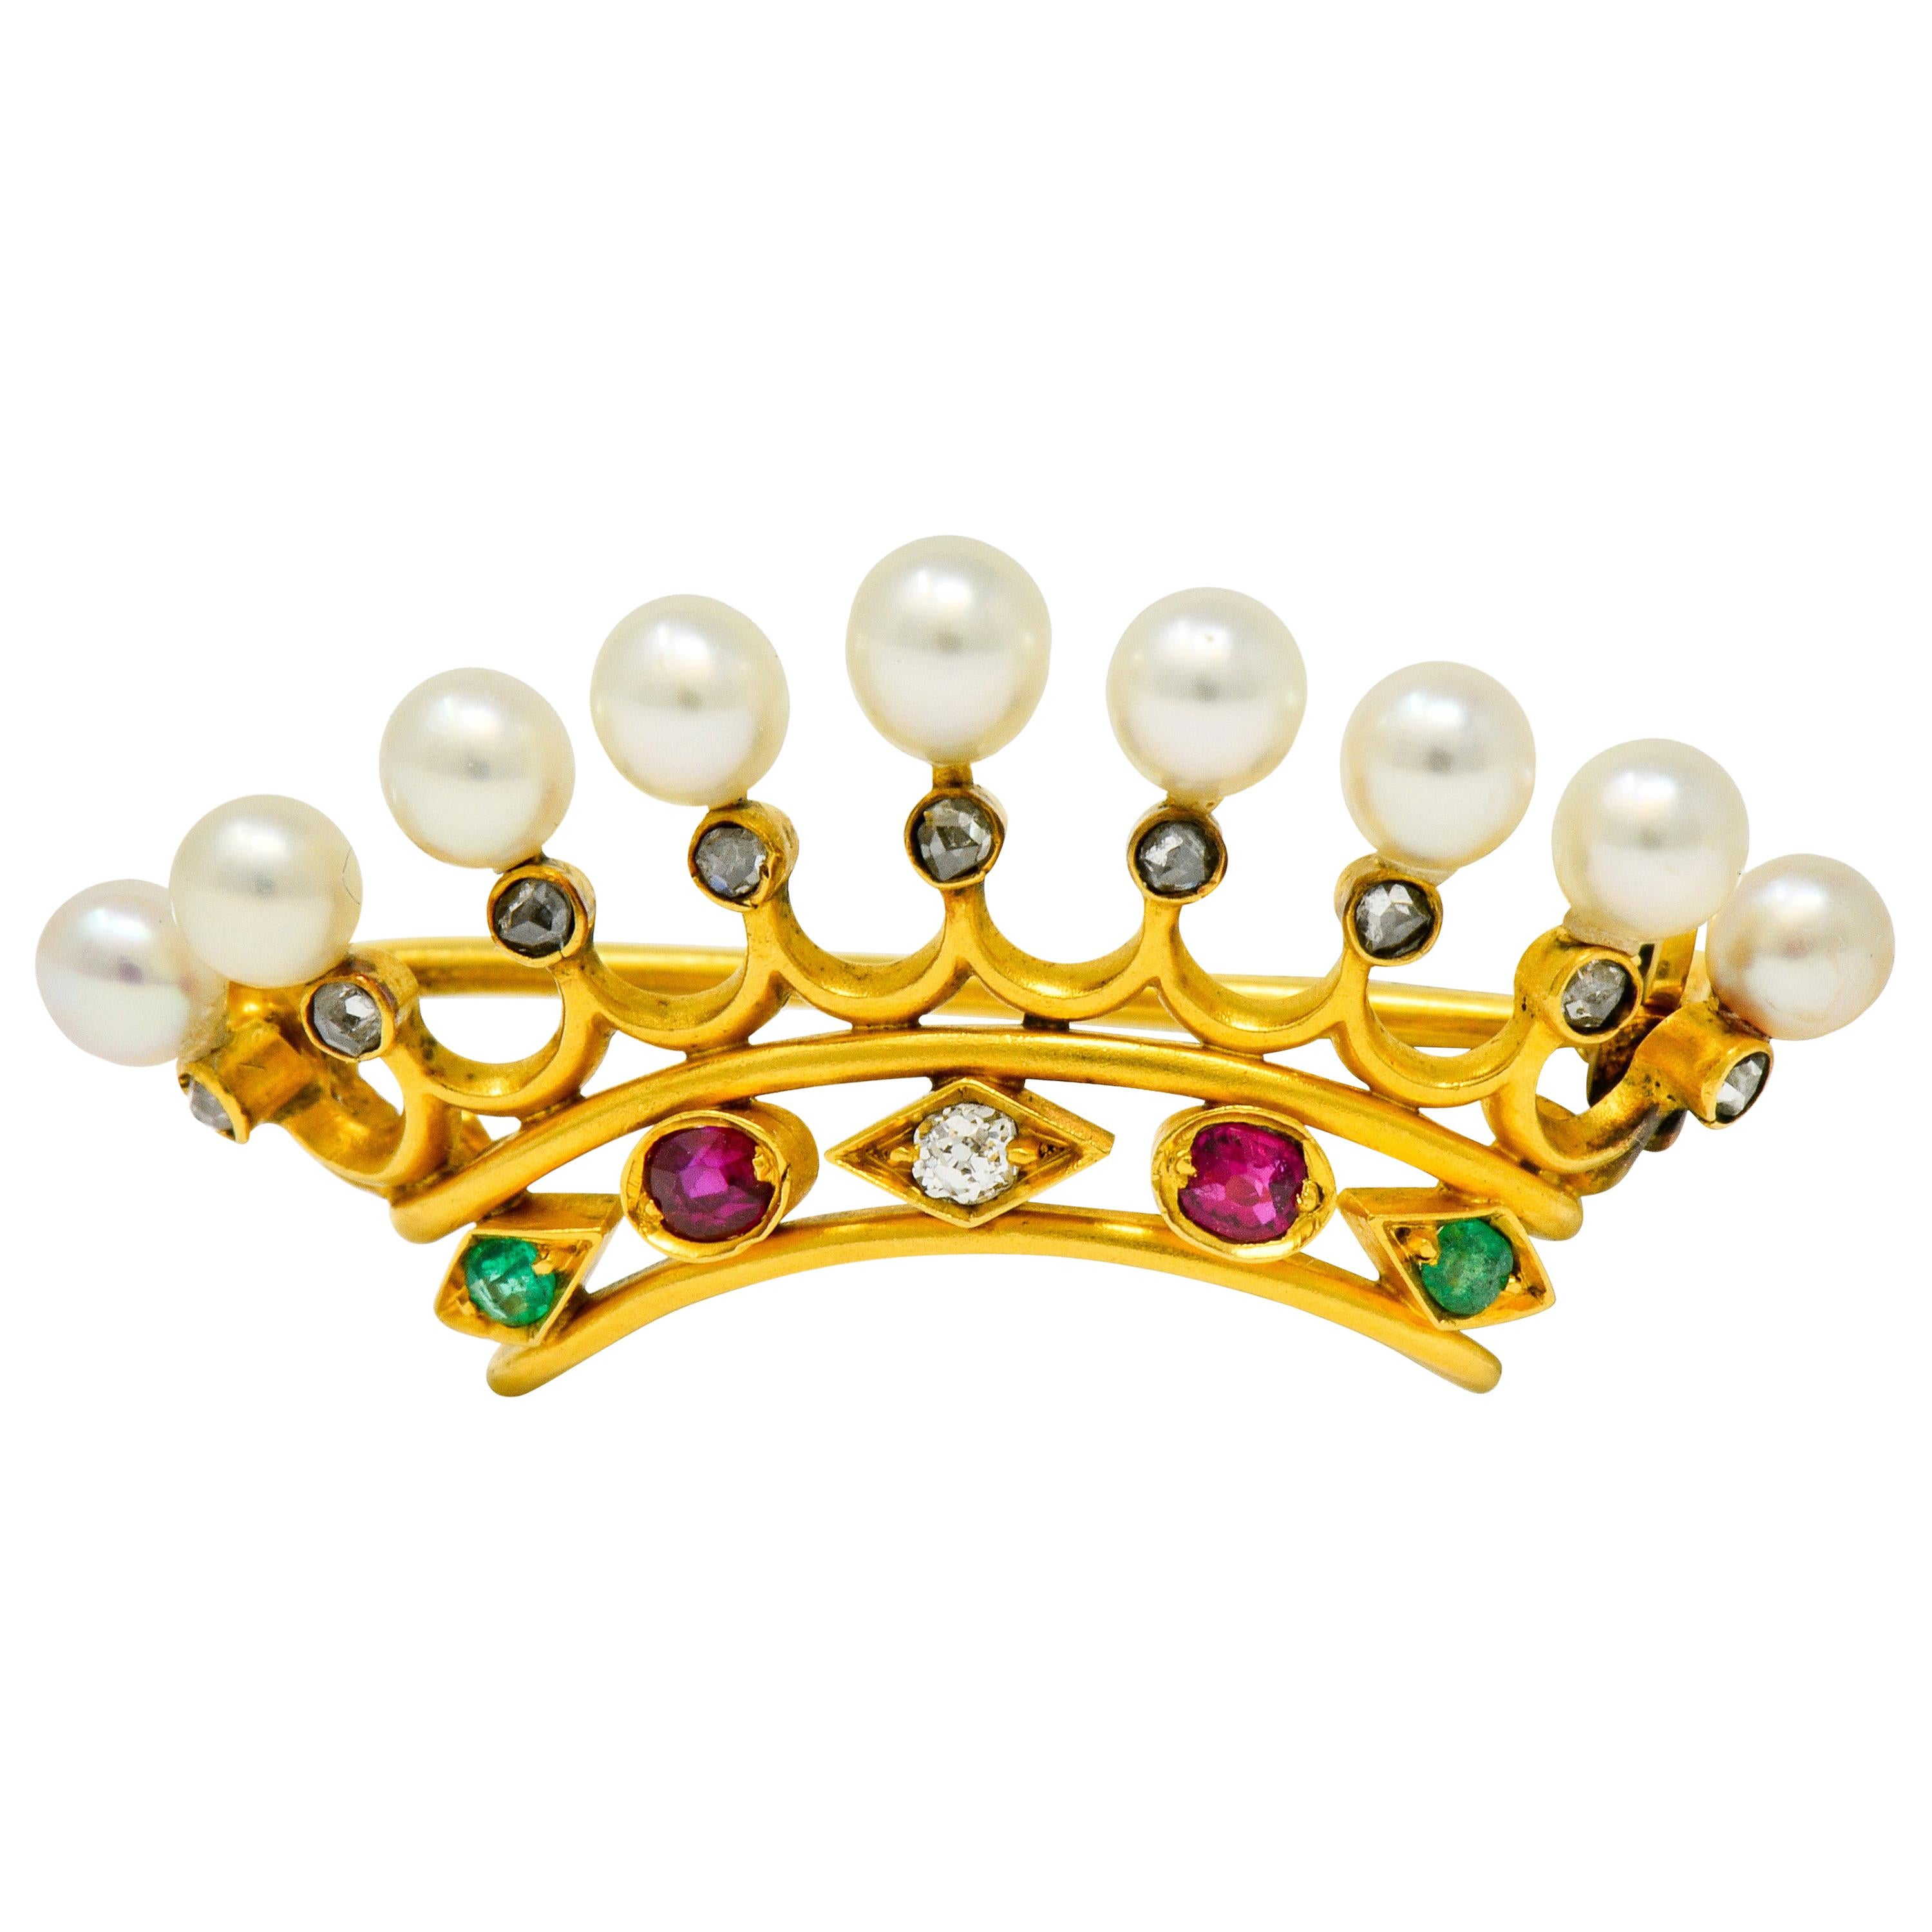 Bailey Banks & Biddle Ruby Emerald Pearl Diamond 18 Karat Gold Crown Brooch